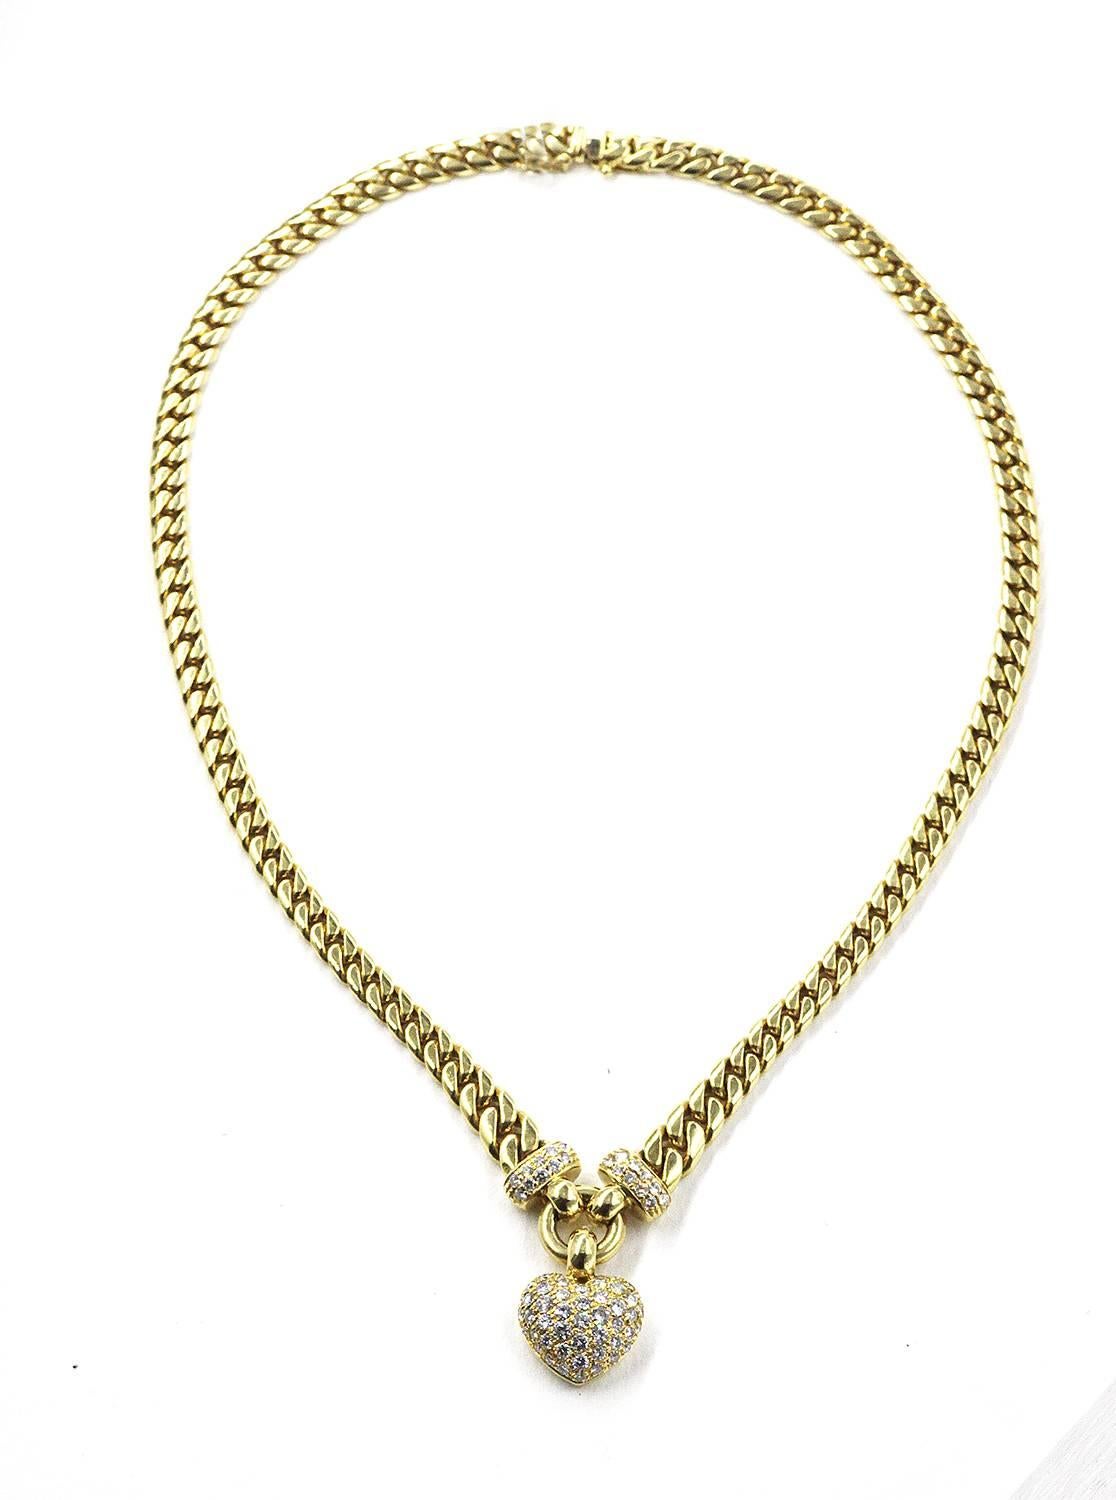 Custom Gold Diamond Heart Pendant Necklace with  18K Miami Cuban Link Chain. 88 Diamonds 2.52cts G/VS-S1. 